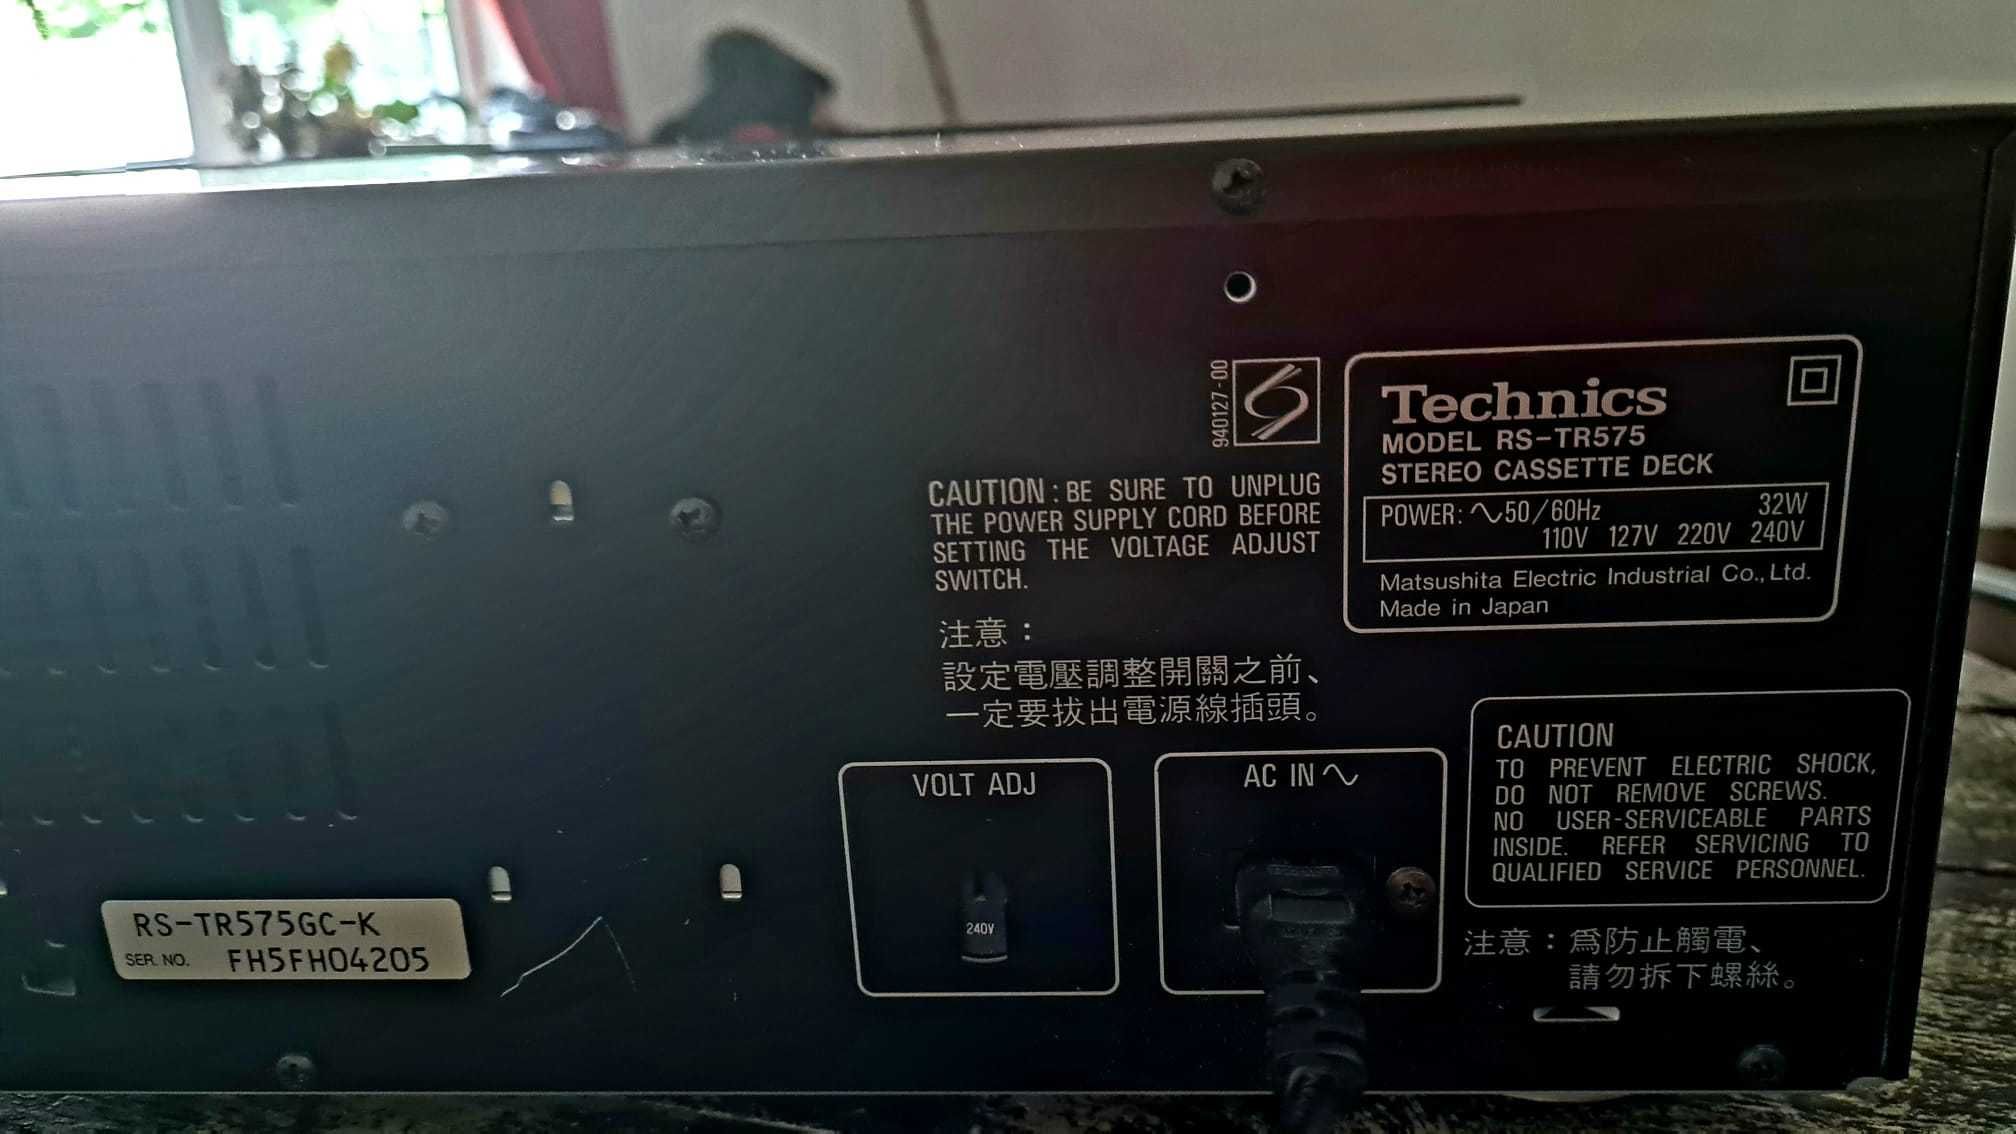 Technics stereo cassette deck RS-TR575